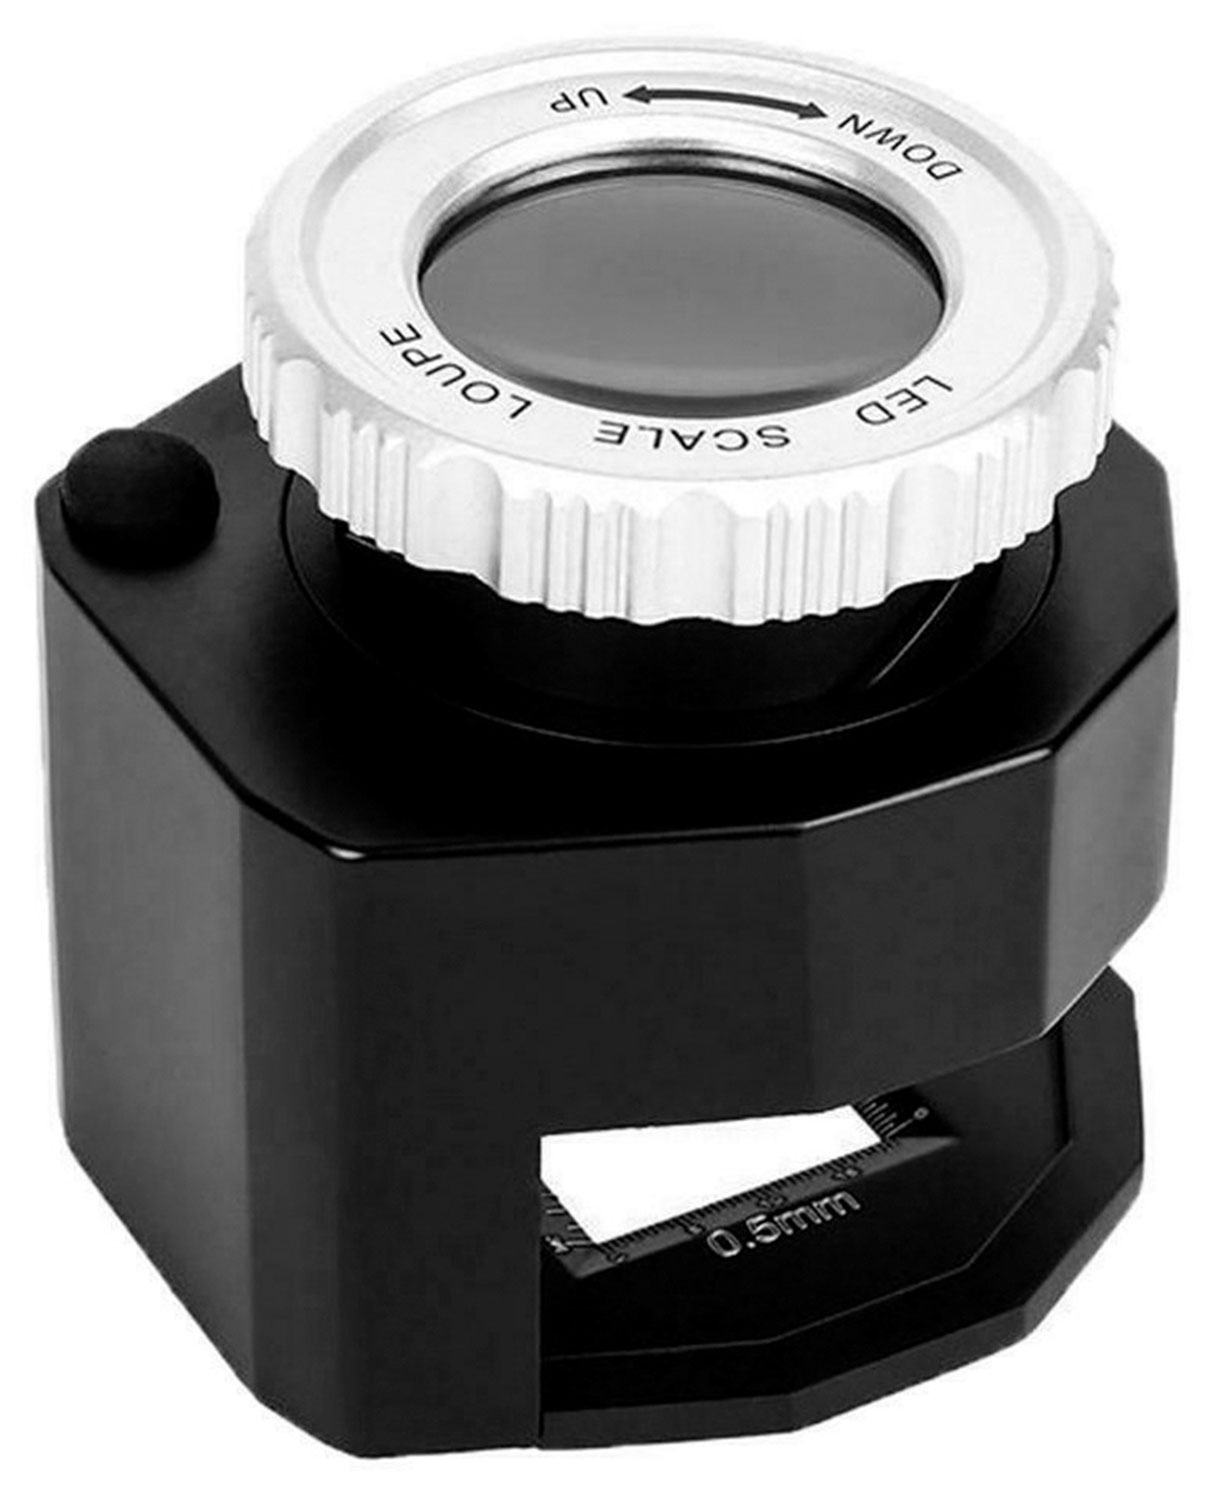 Лупа Kromatech часовая измерительная контактная 30х, 27 мм, с подсветкой, ультрафиолет (6 LED) TH-9006A